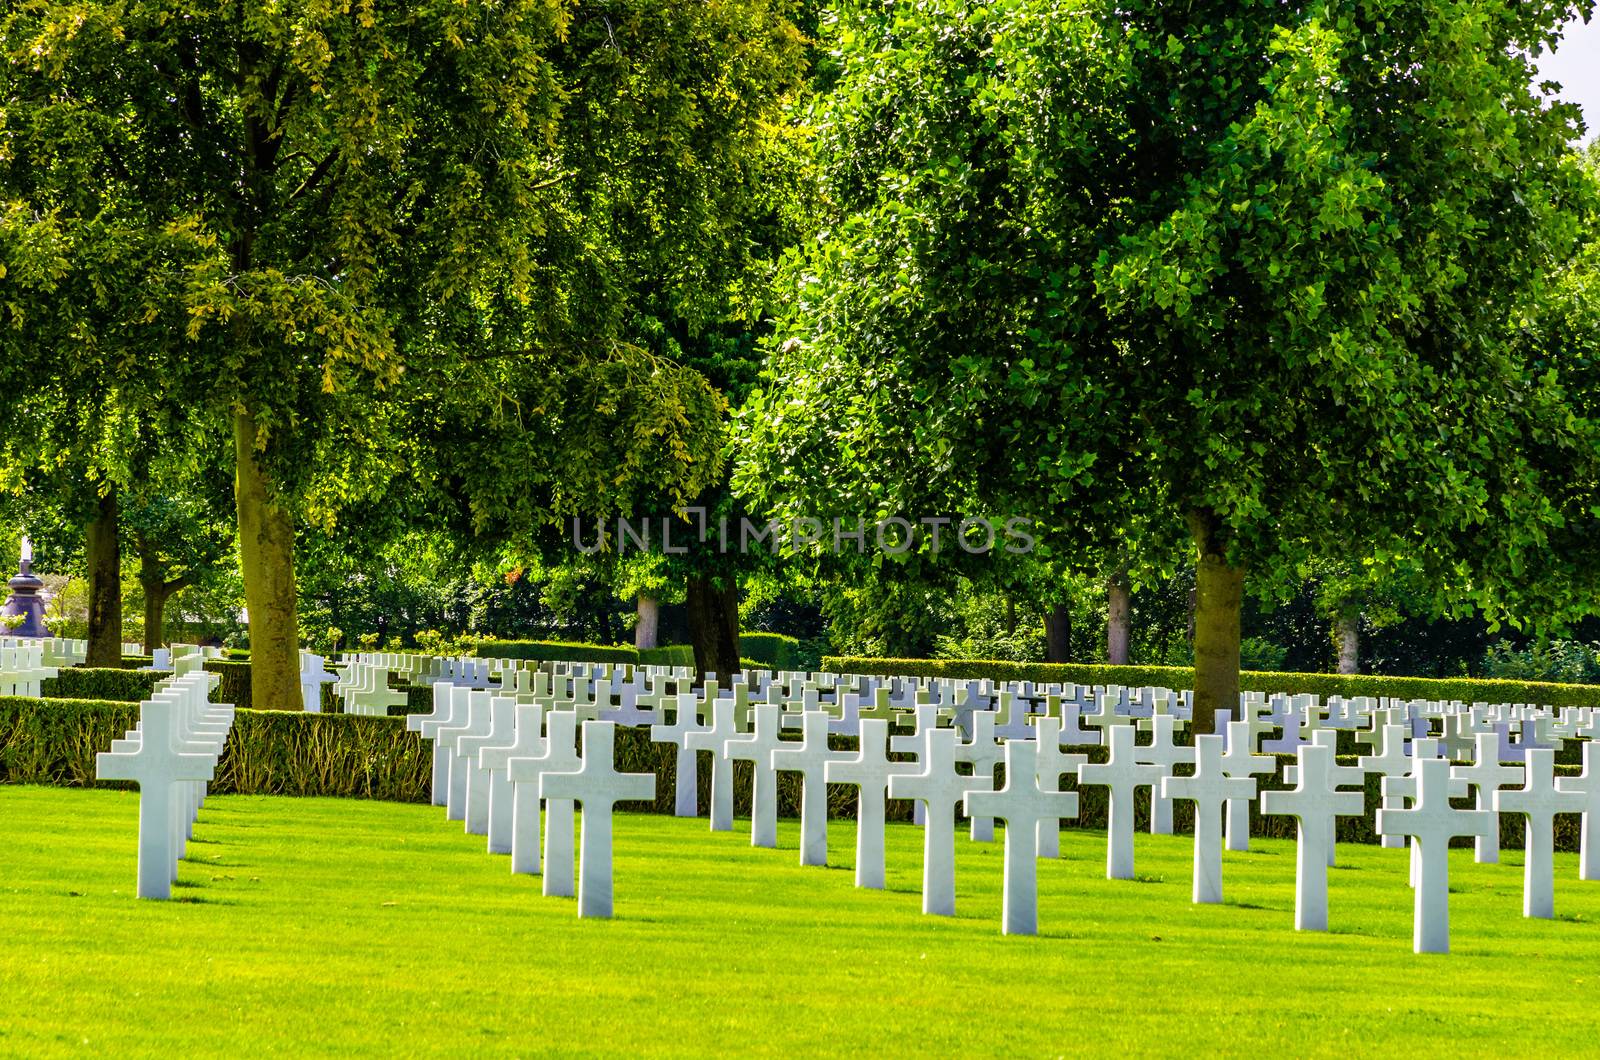 Cambridge, UK - 08 12 2017: American Cemetery and Memorial in the sun by mauricallari